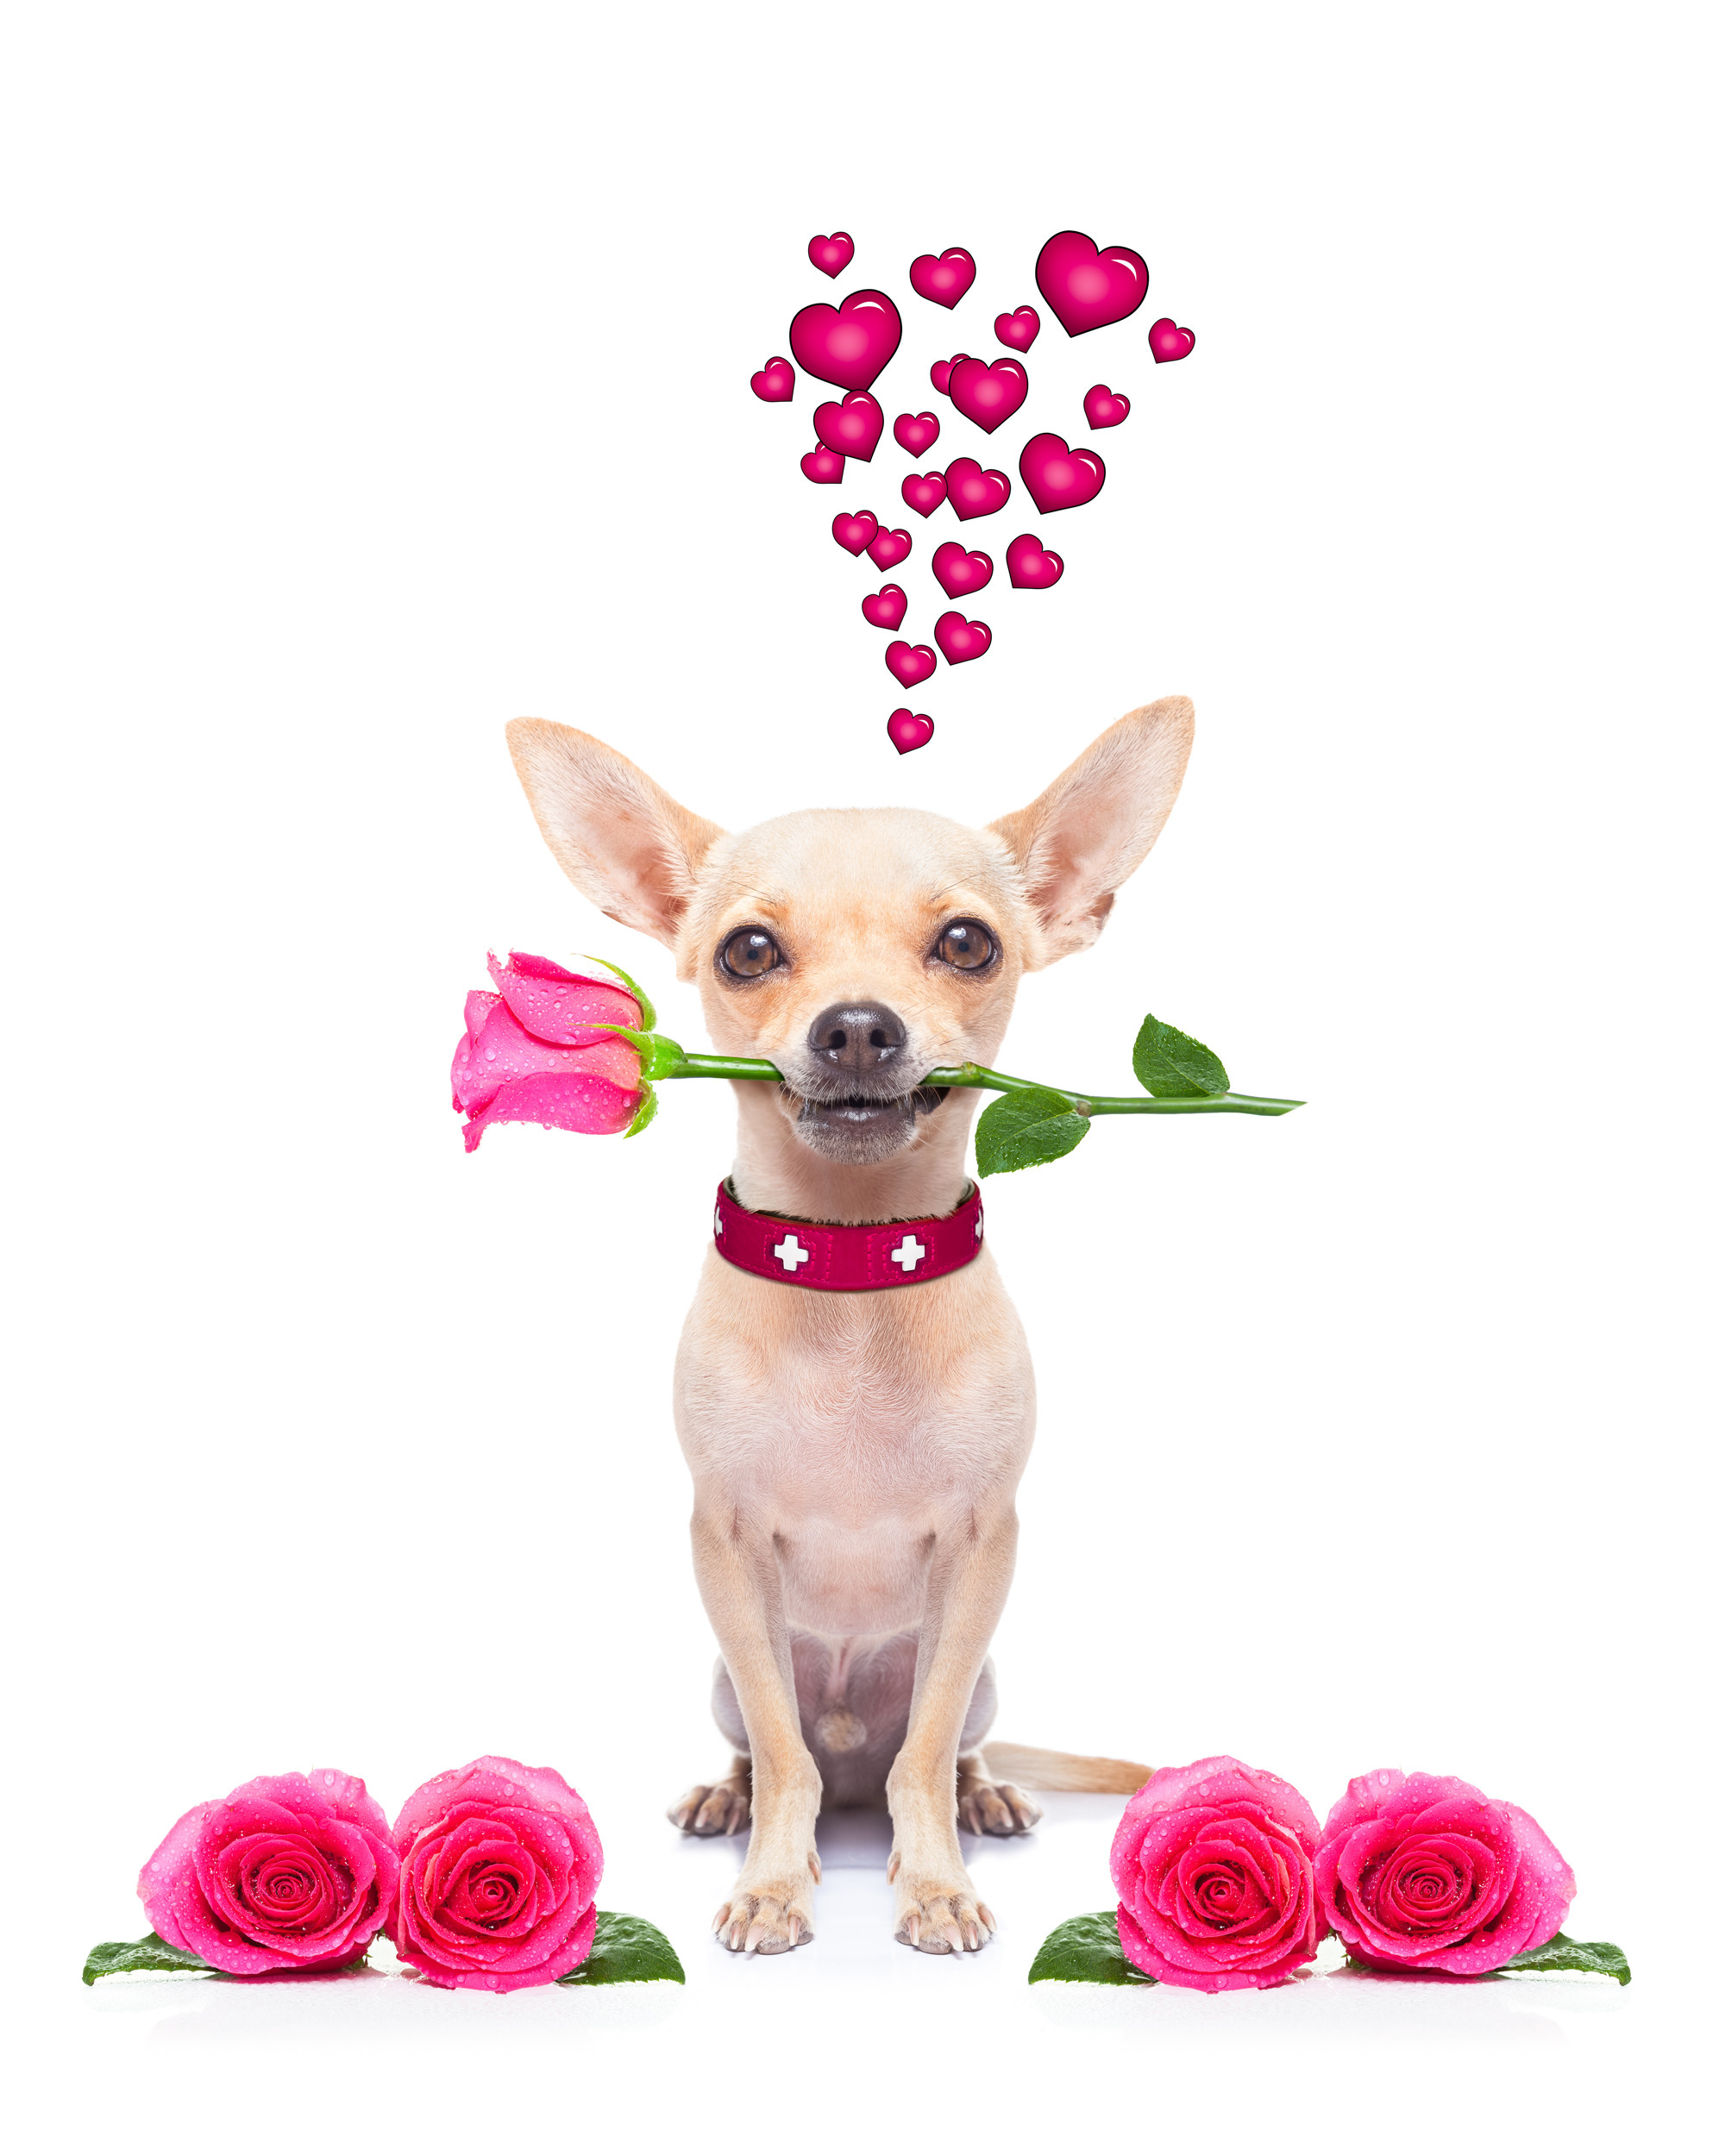 Dog, flowers, valentines day